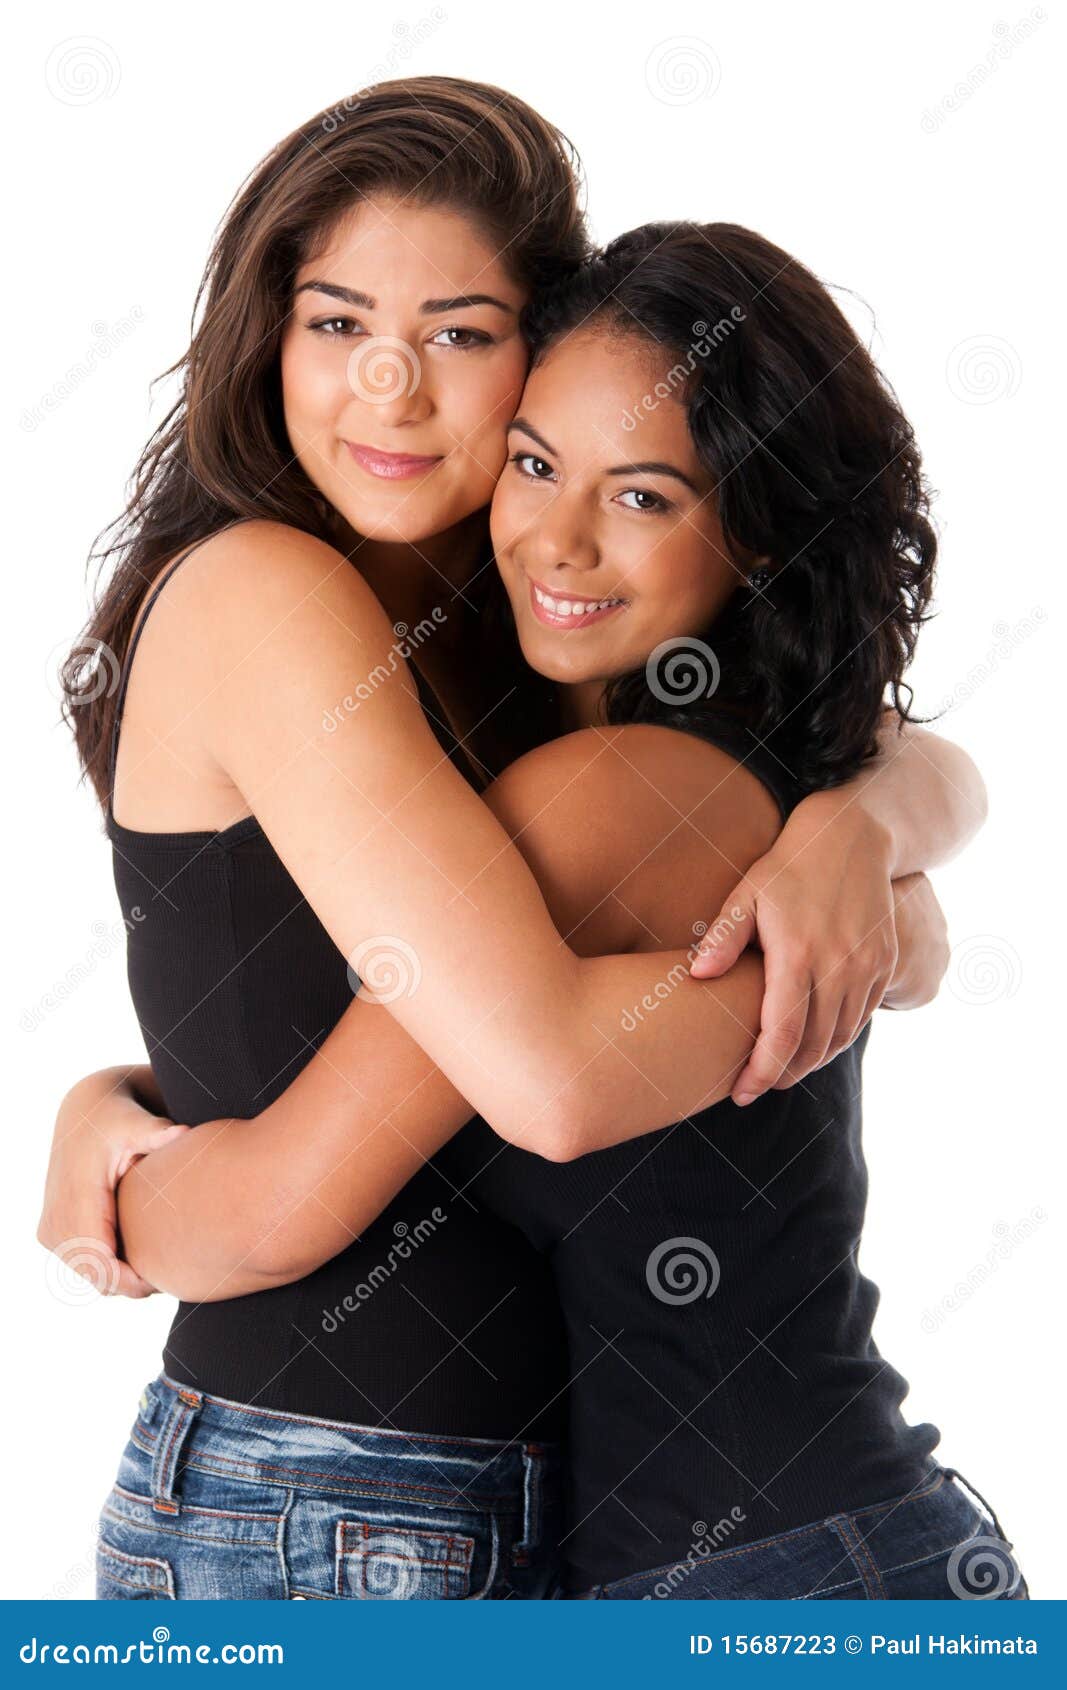 Best Friends - Hugging Women Stock Image - Image of girls ...